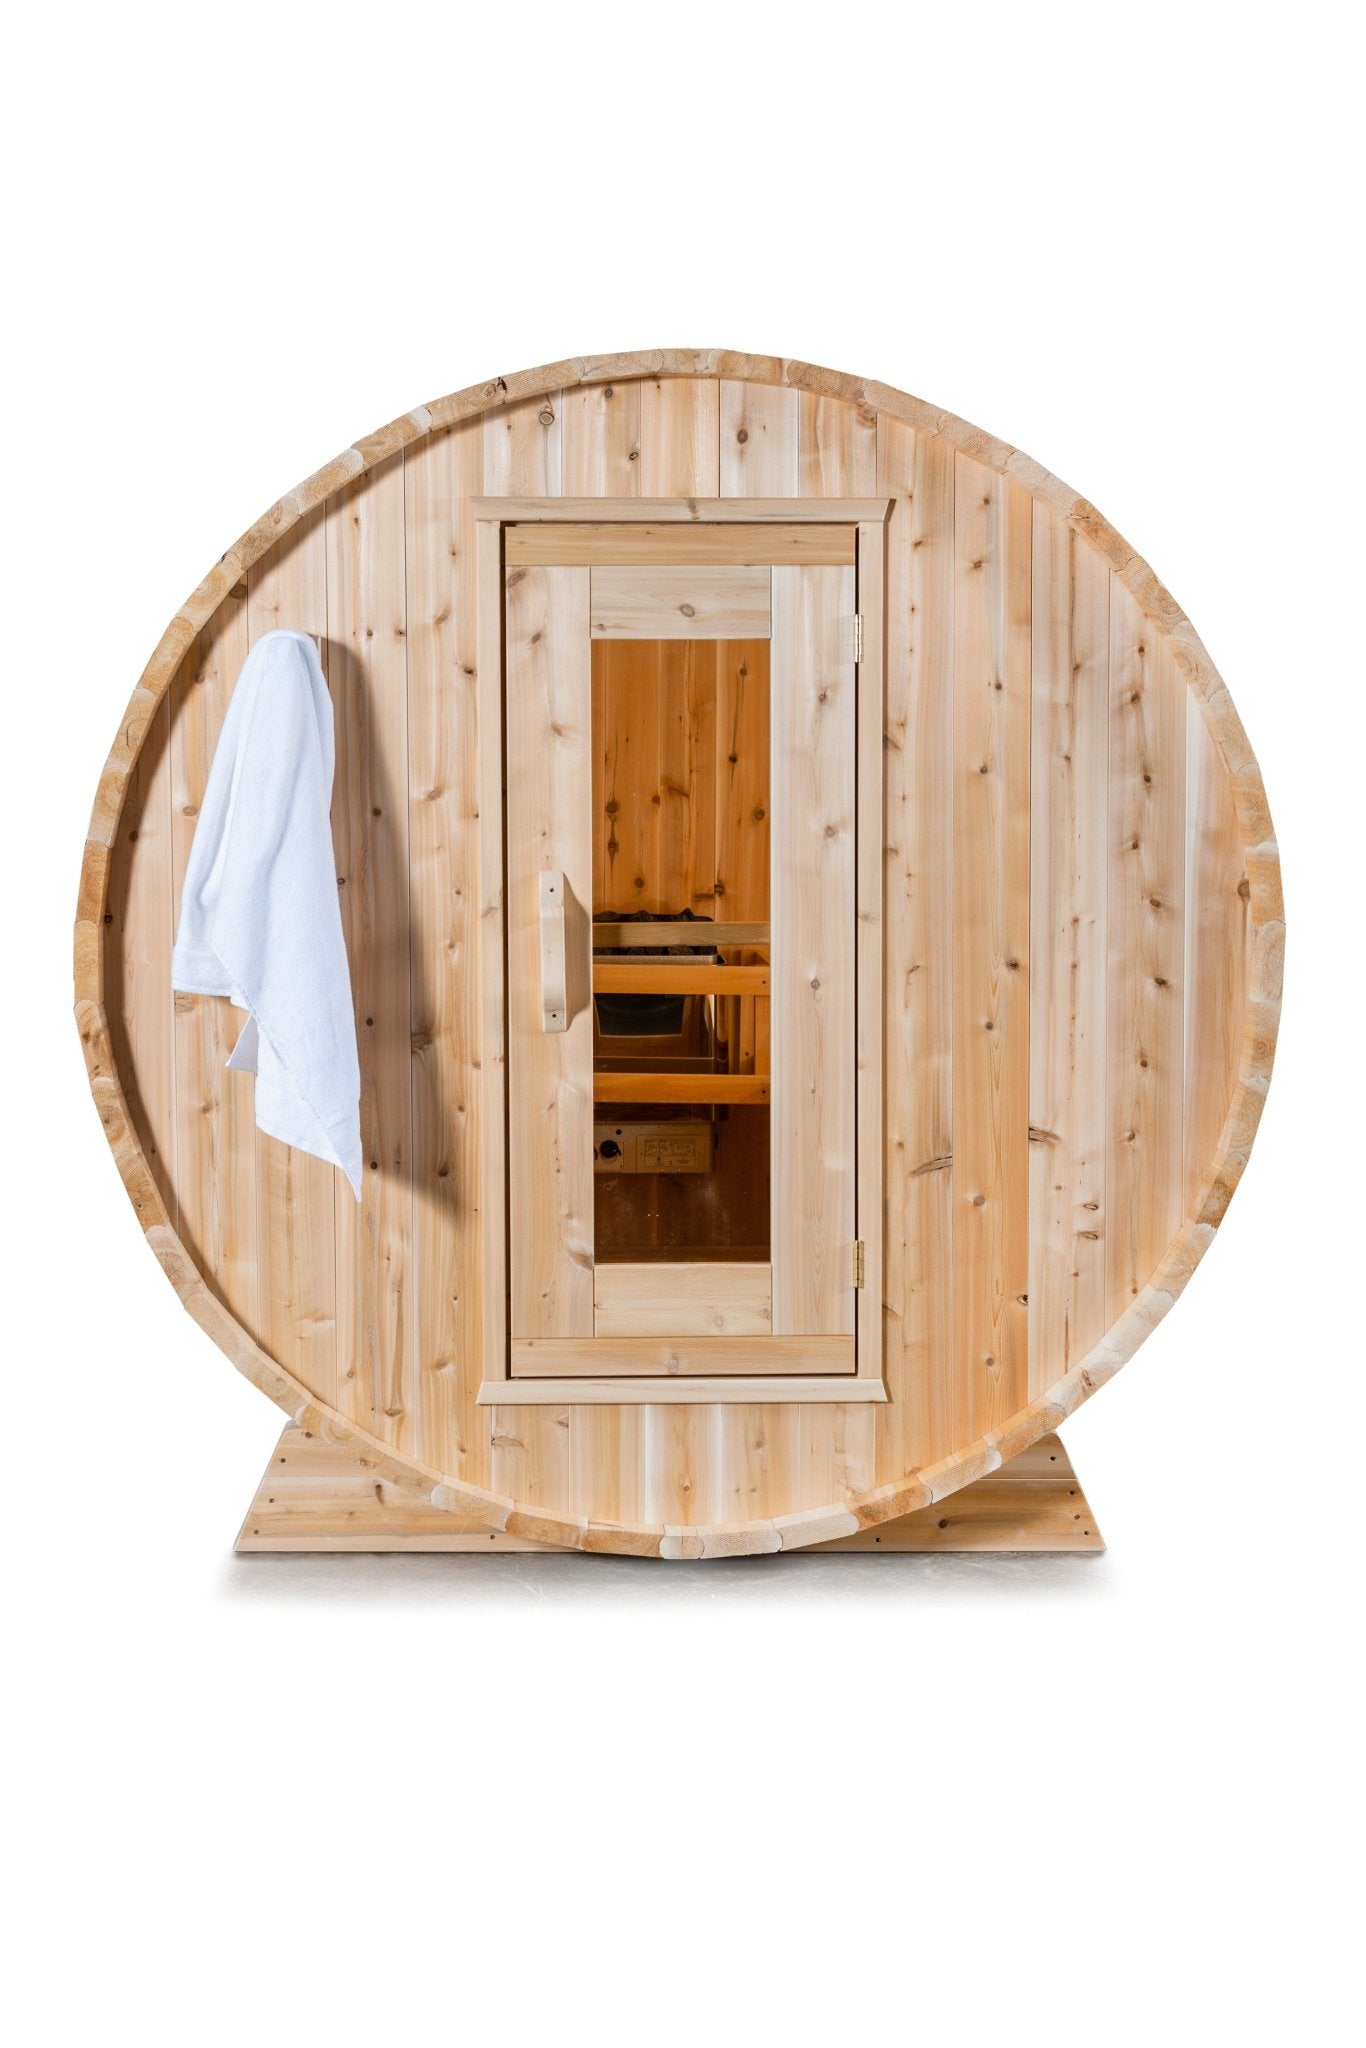 Dundalk Leisurecraft Canadian Timber 4 Person Harmony Barrel Sauna | CTC22W - WellMed Supply